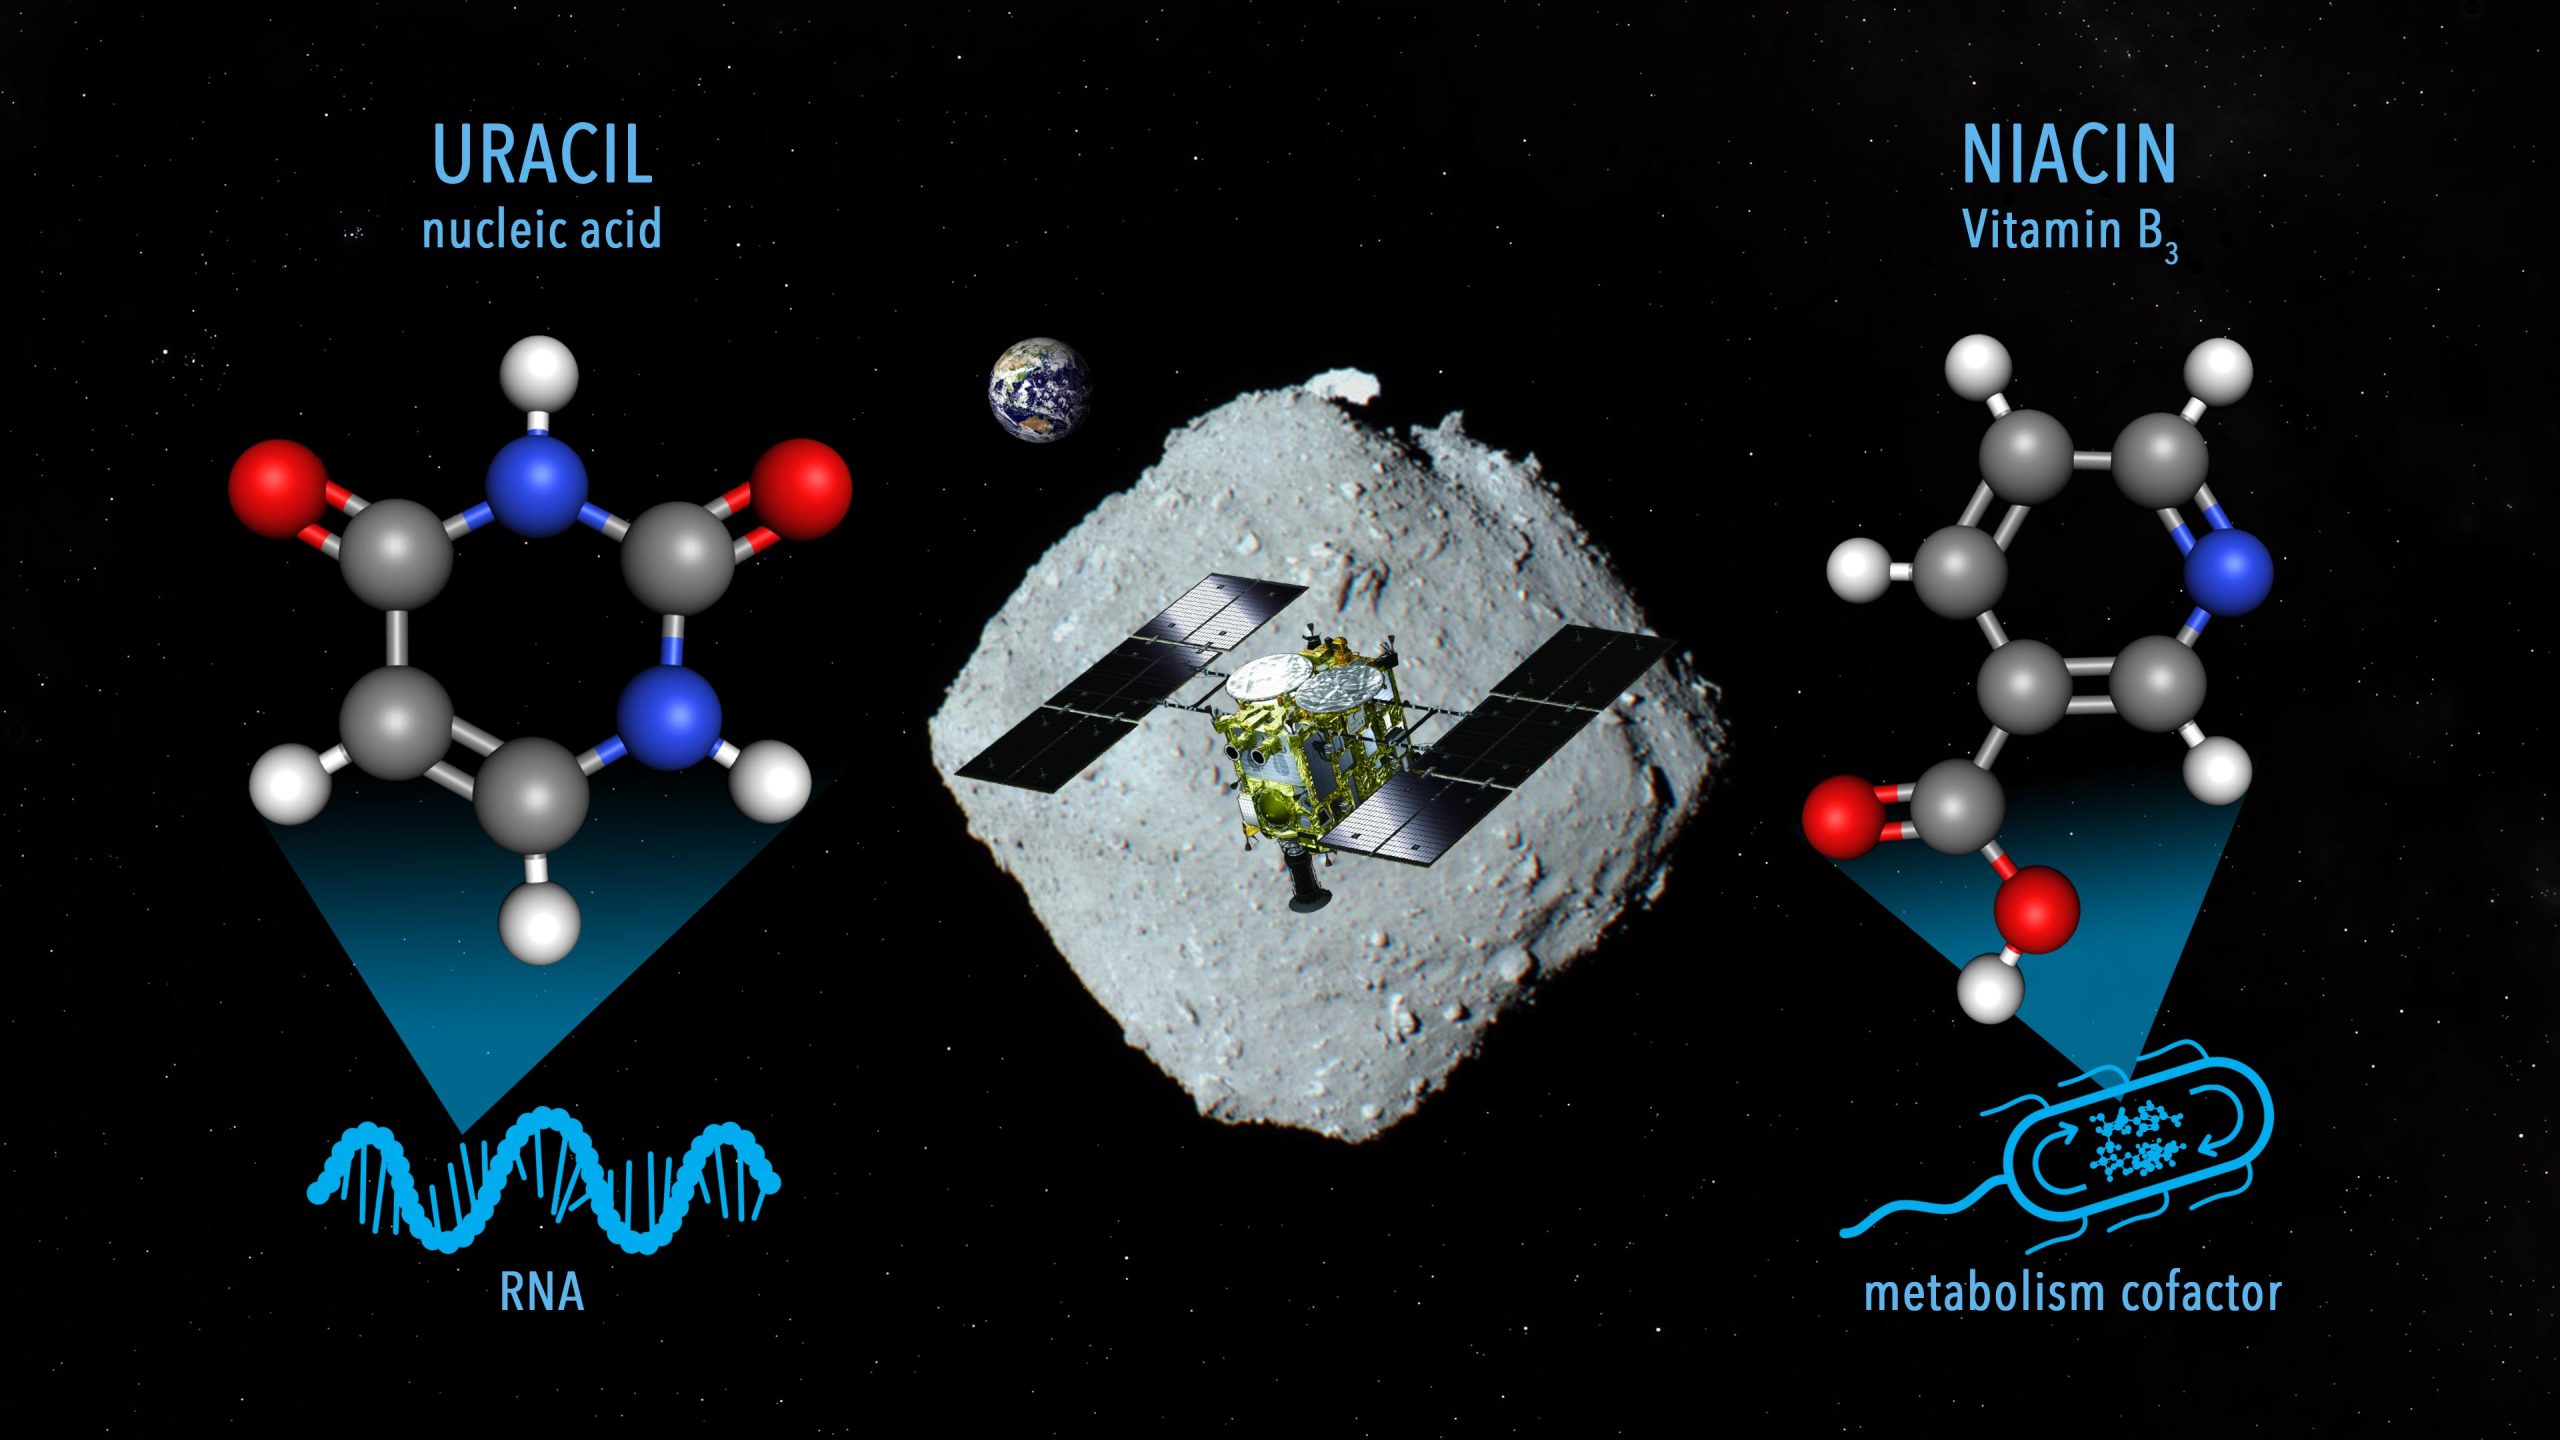 Asteroid Ryugu Rracil and Niacin scaled